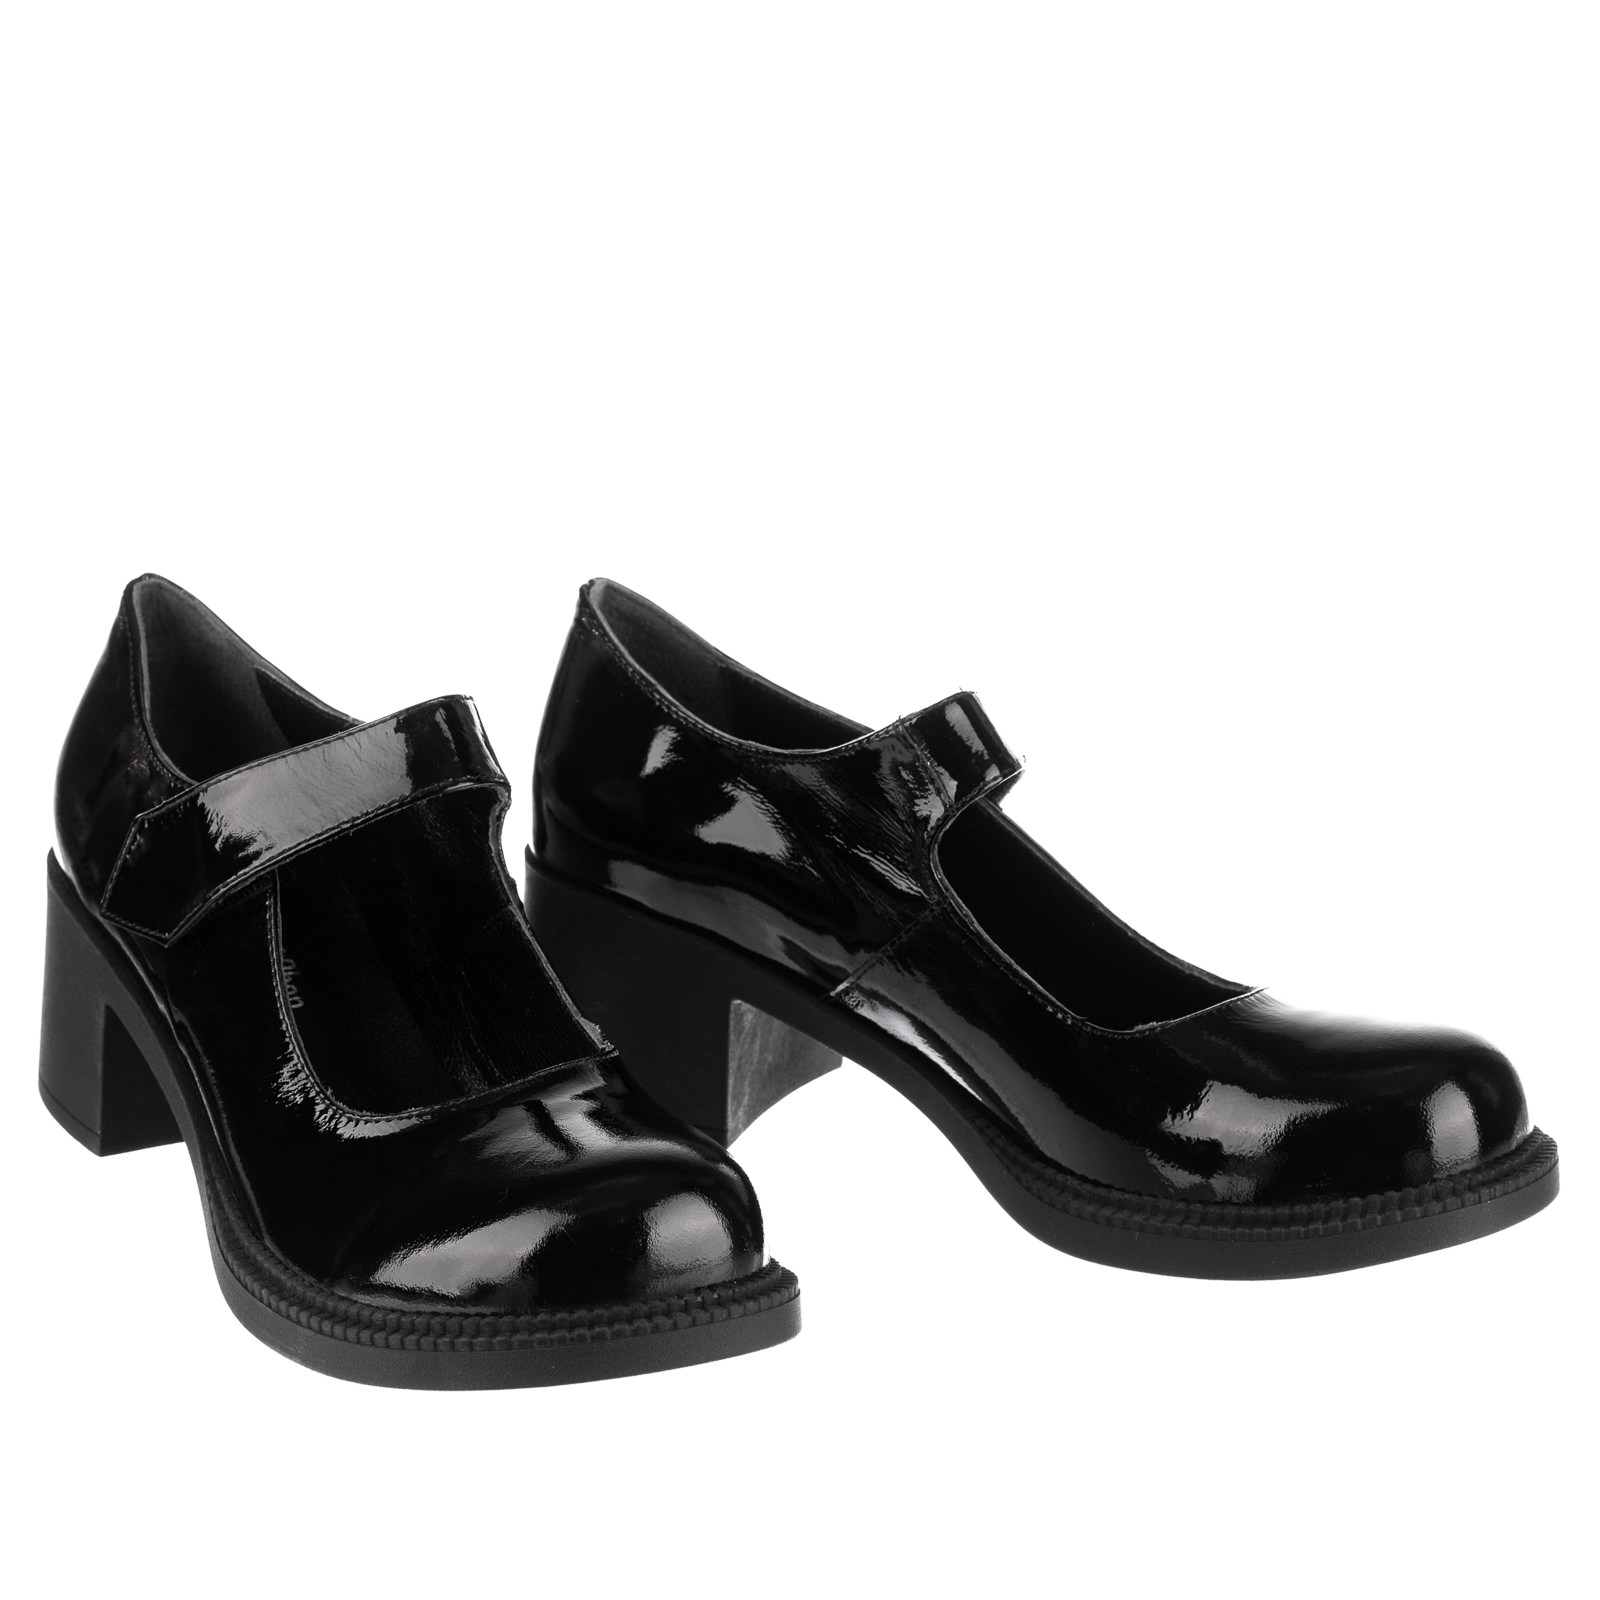 Leather shoes & flats B663 - BLACK